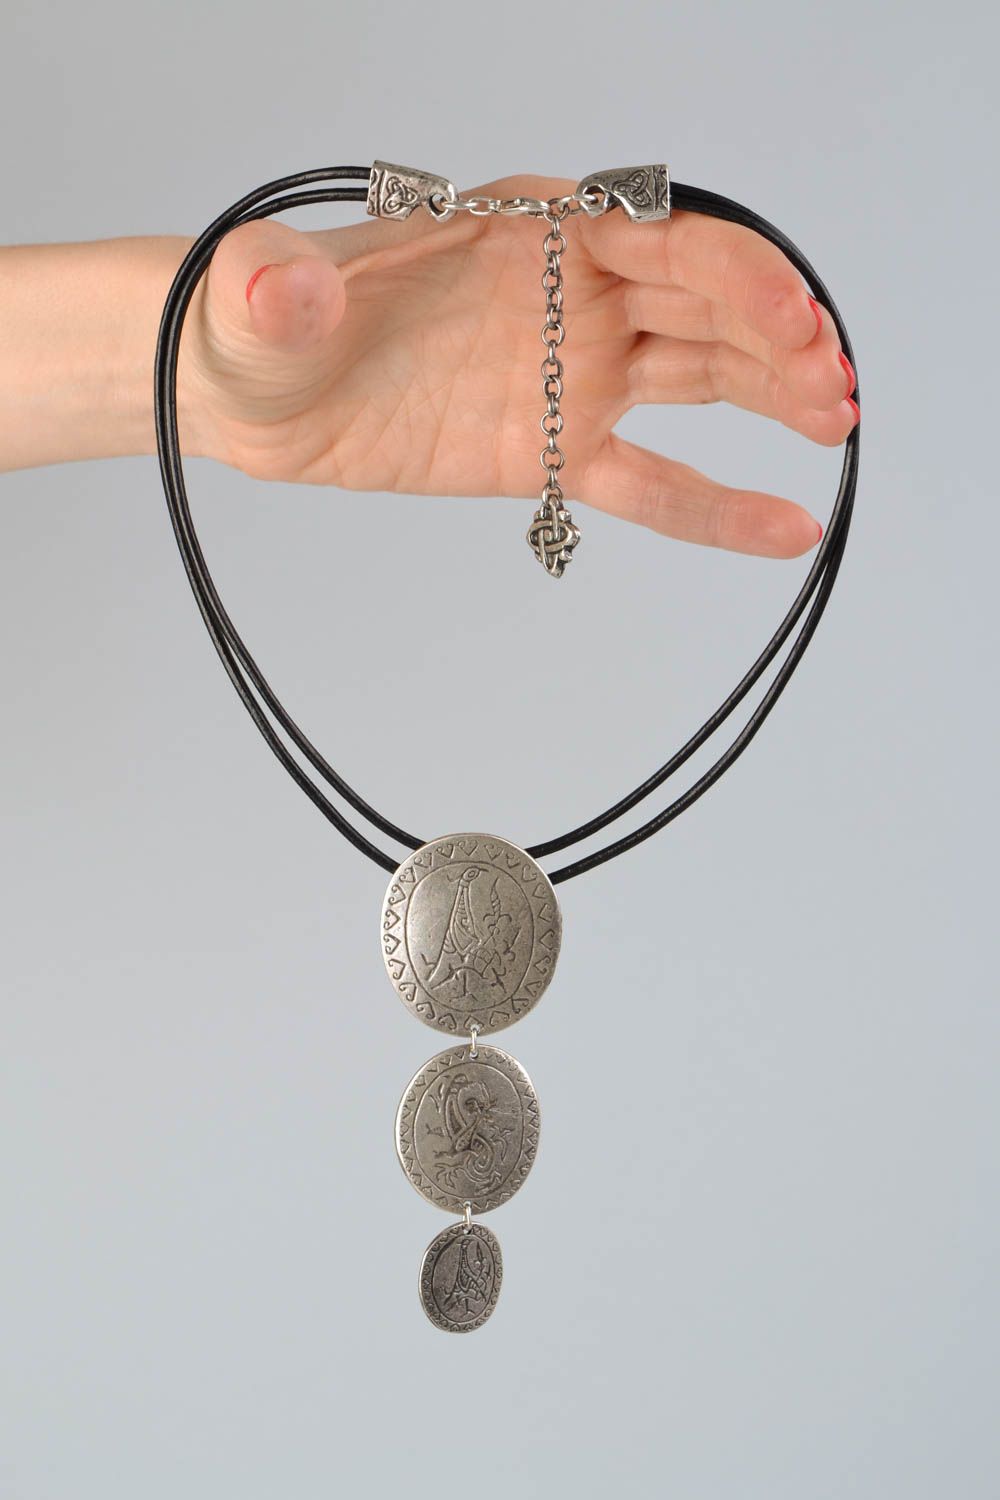 Metal necklace made using chill casting technique Scythian Crane photo 2